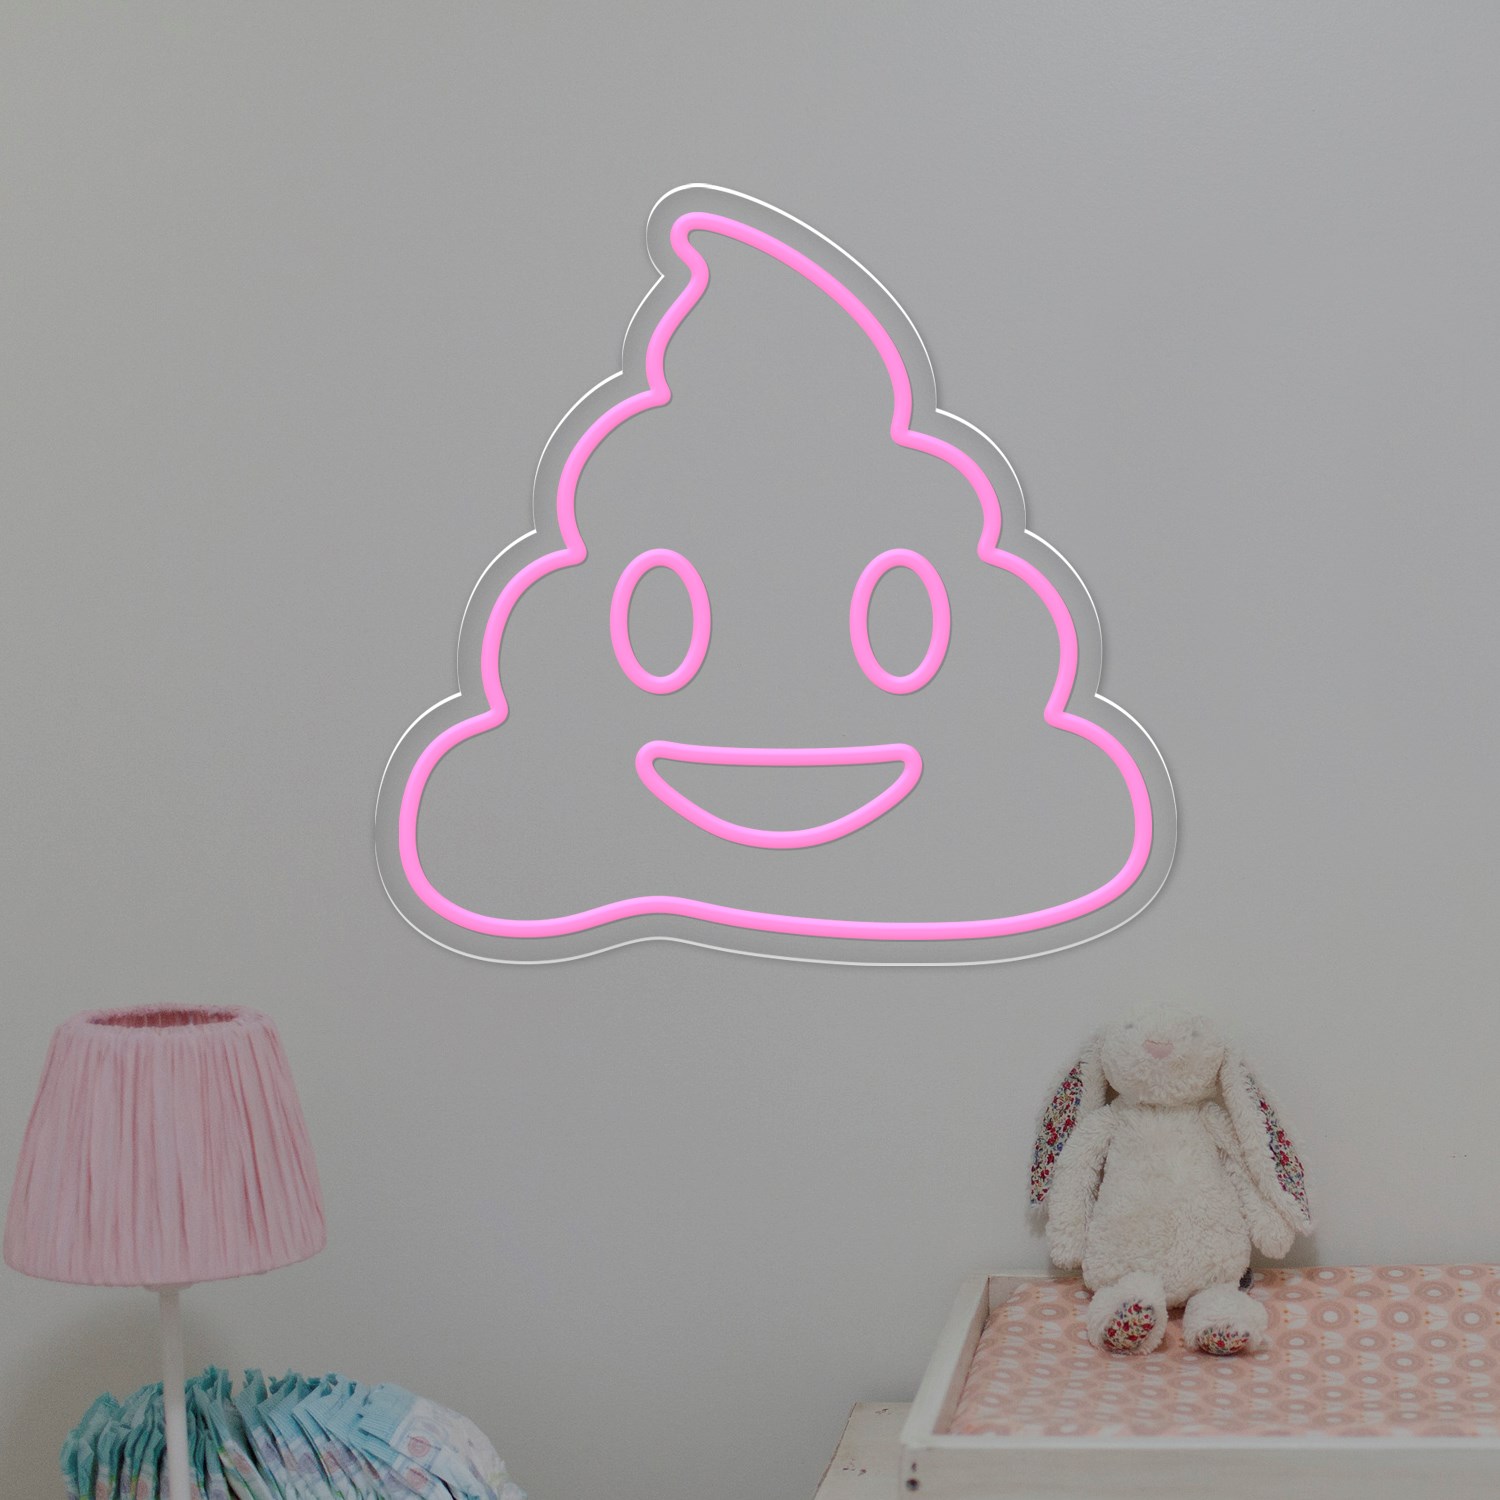 Picture of Poop Emoji Neon Sign